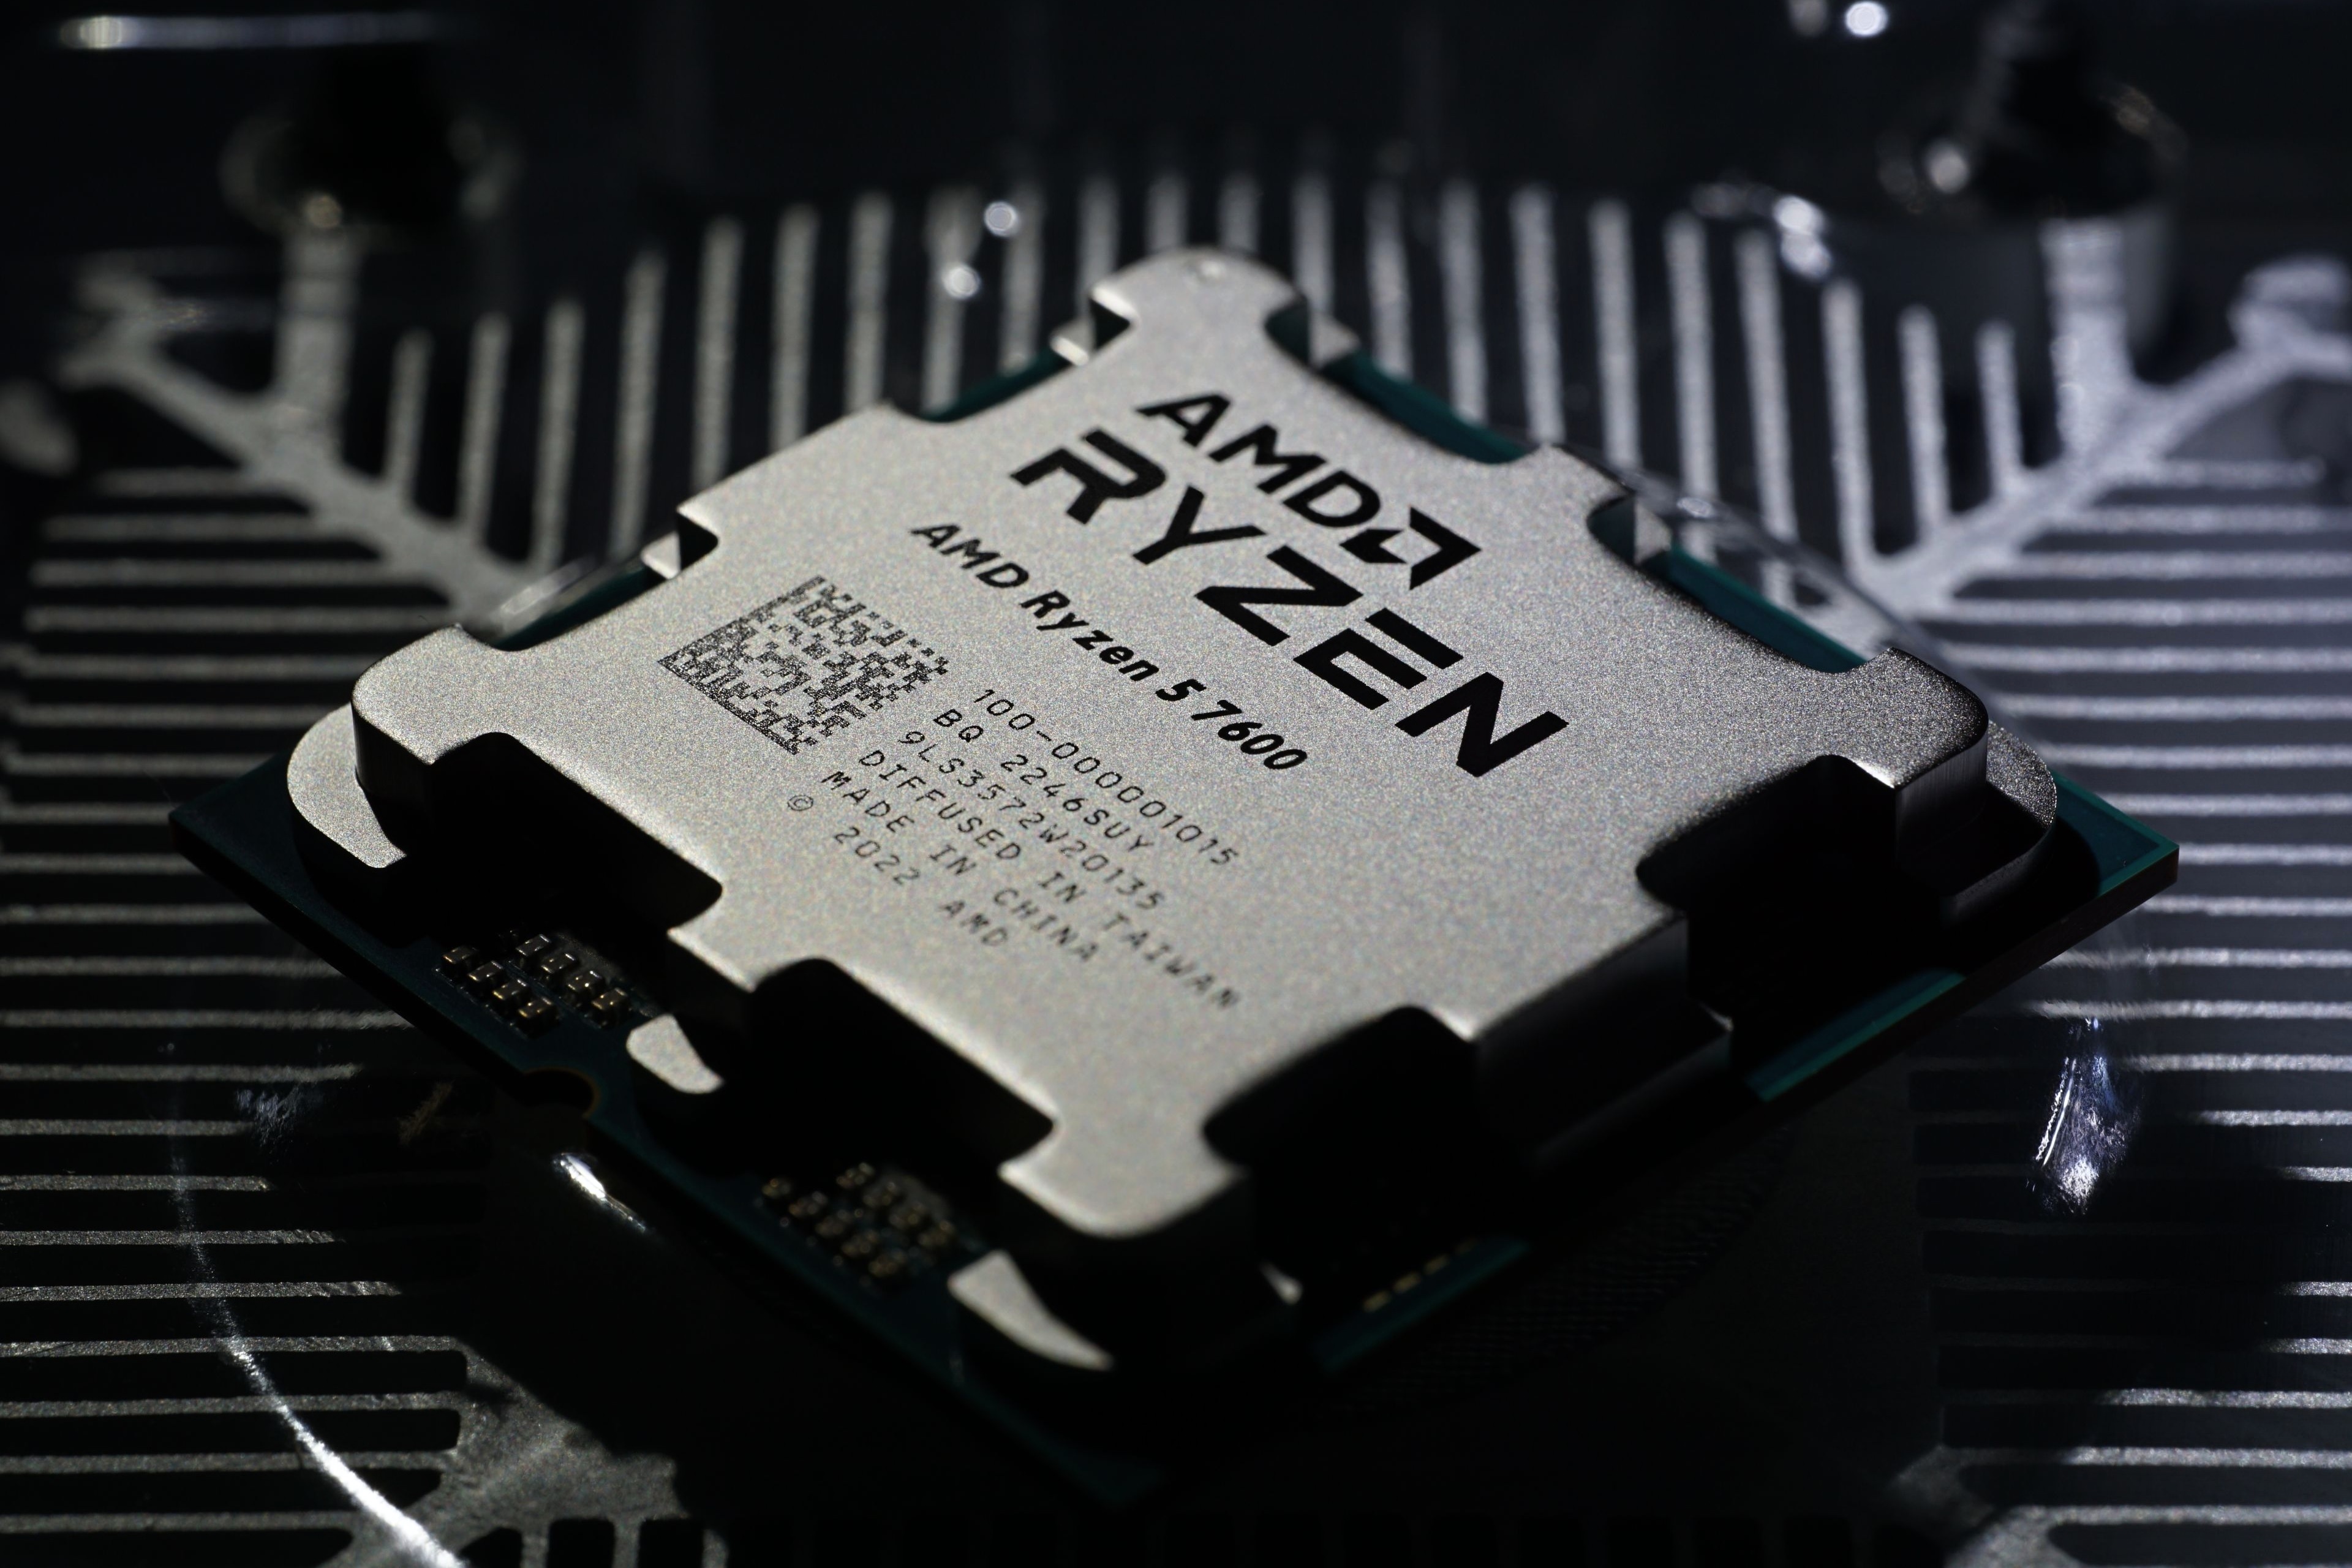 amd Ryzen 5 7600 3.8 GHz Upto 5.1 GHz AM5 Socket 6 Cores 12 Threads 6 MB L2  32 MB L3 Desktop Processor - amd 